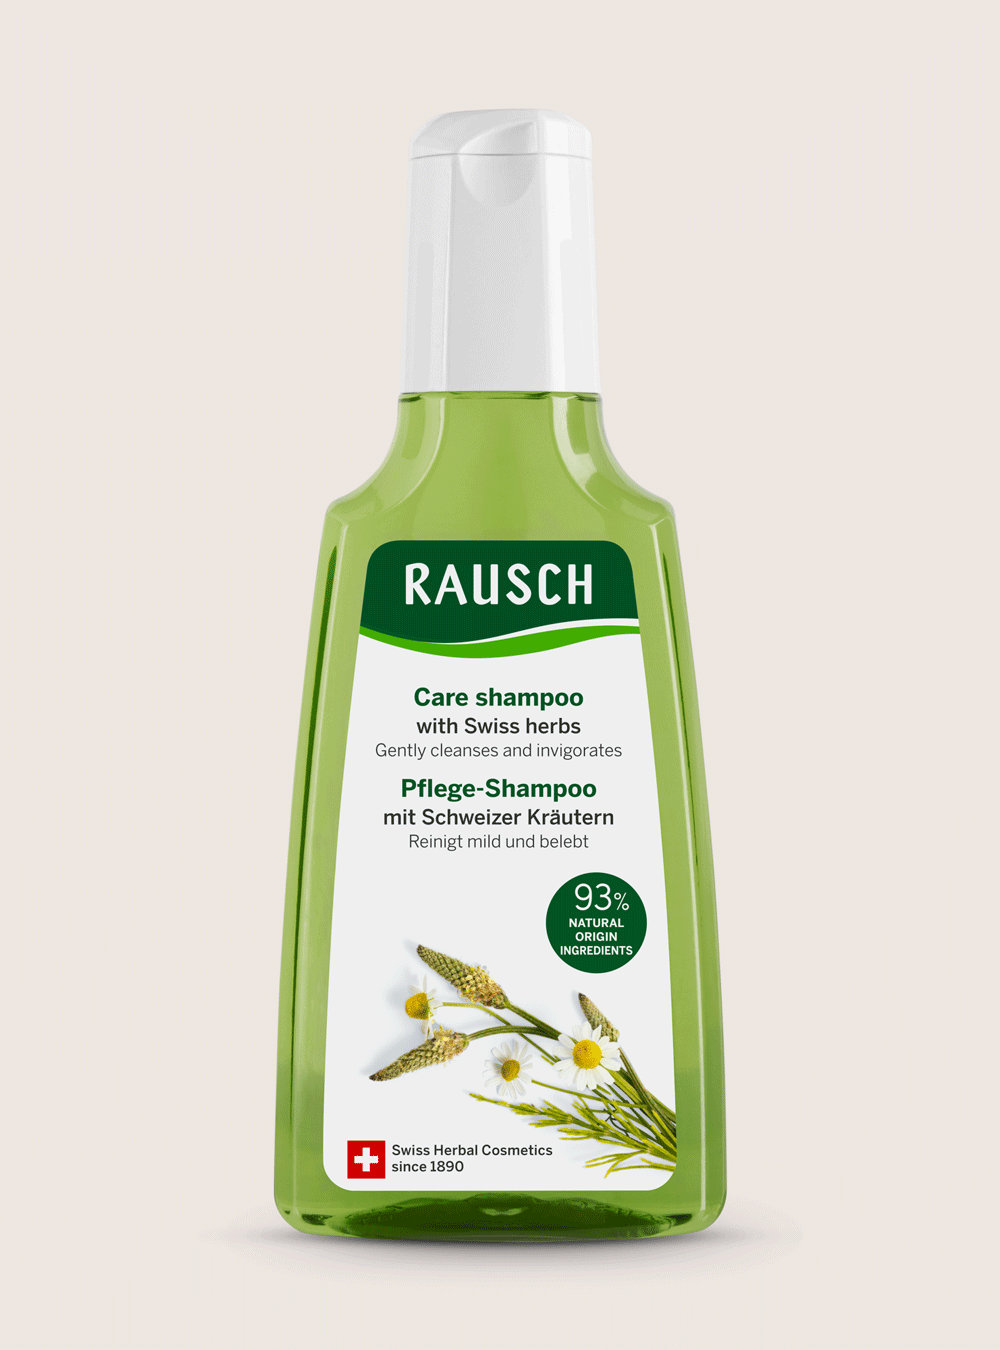 Care shampoo with Swiss herbs